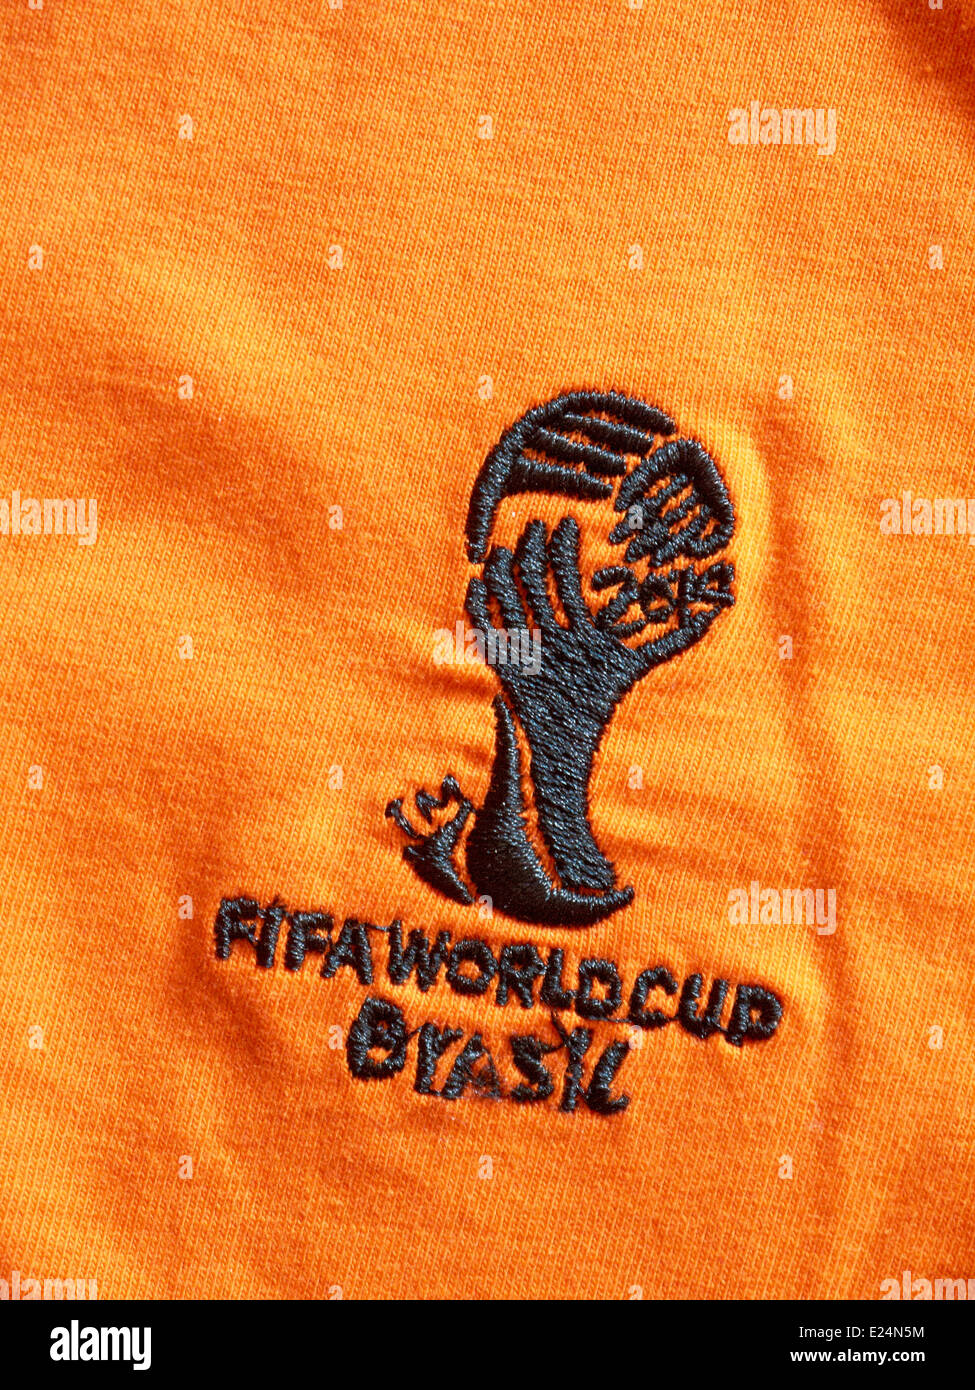 Dutch football shirt with Fifa World cup 2014 logo Stock Photo